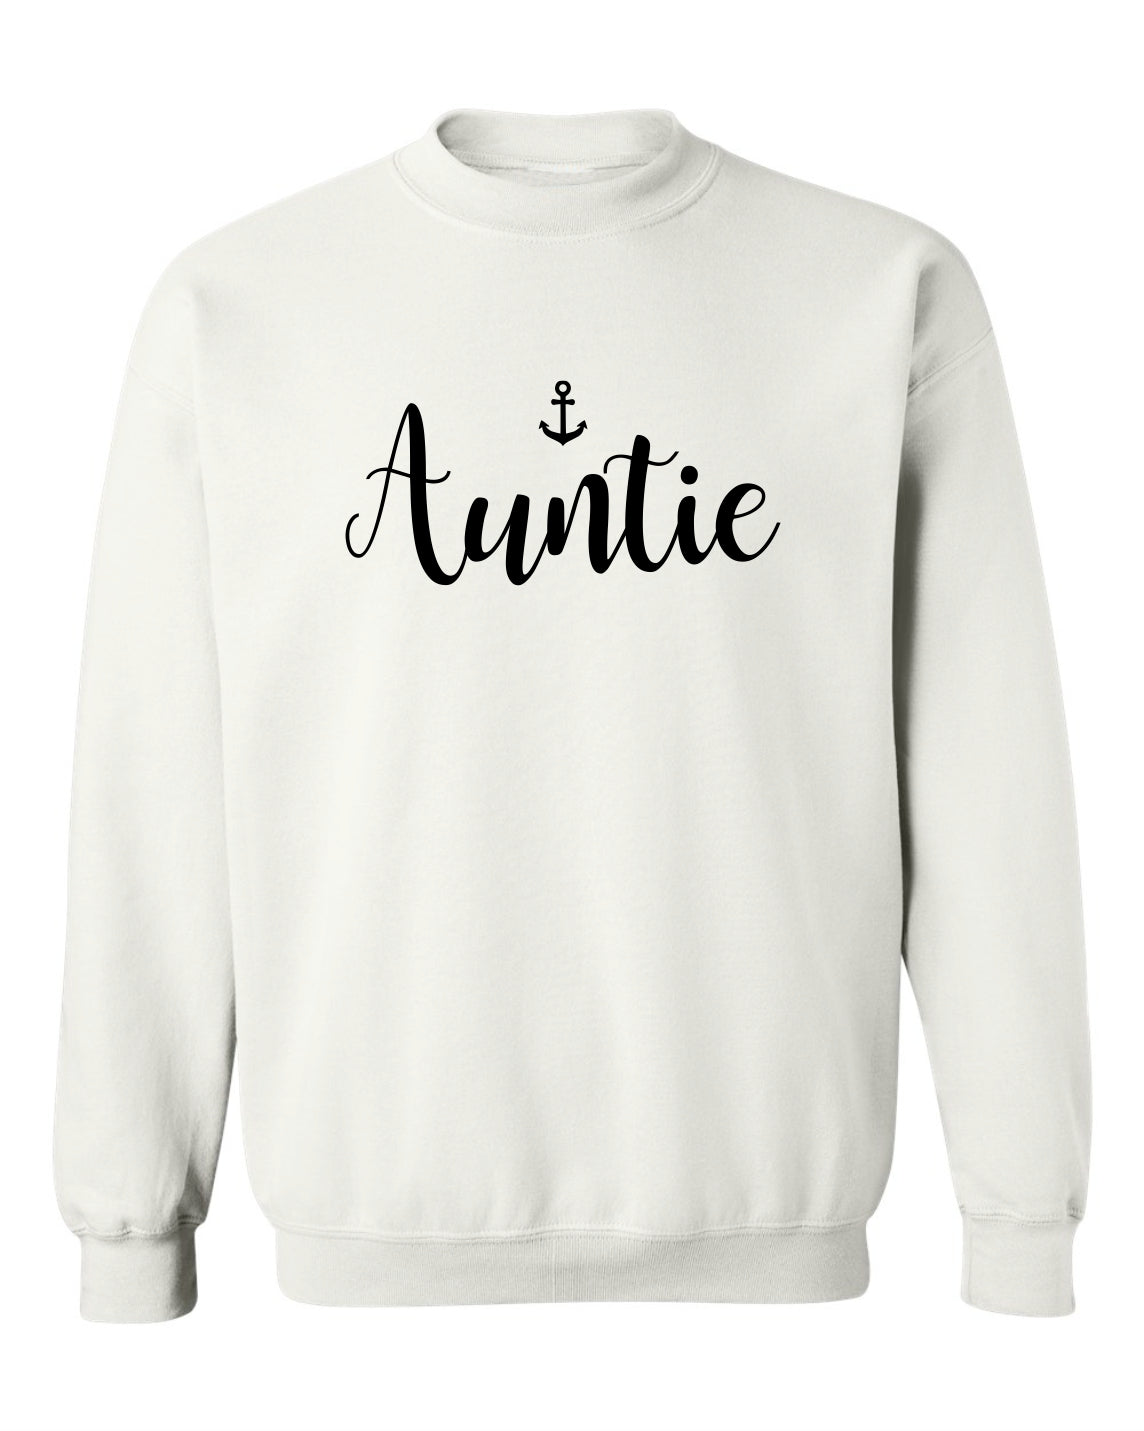 "Auntie" Unisex Crewneck Sweatshirt